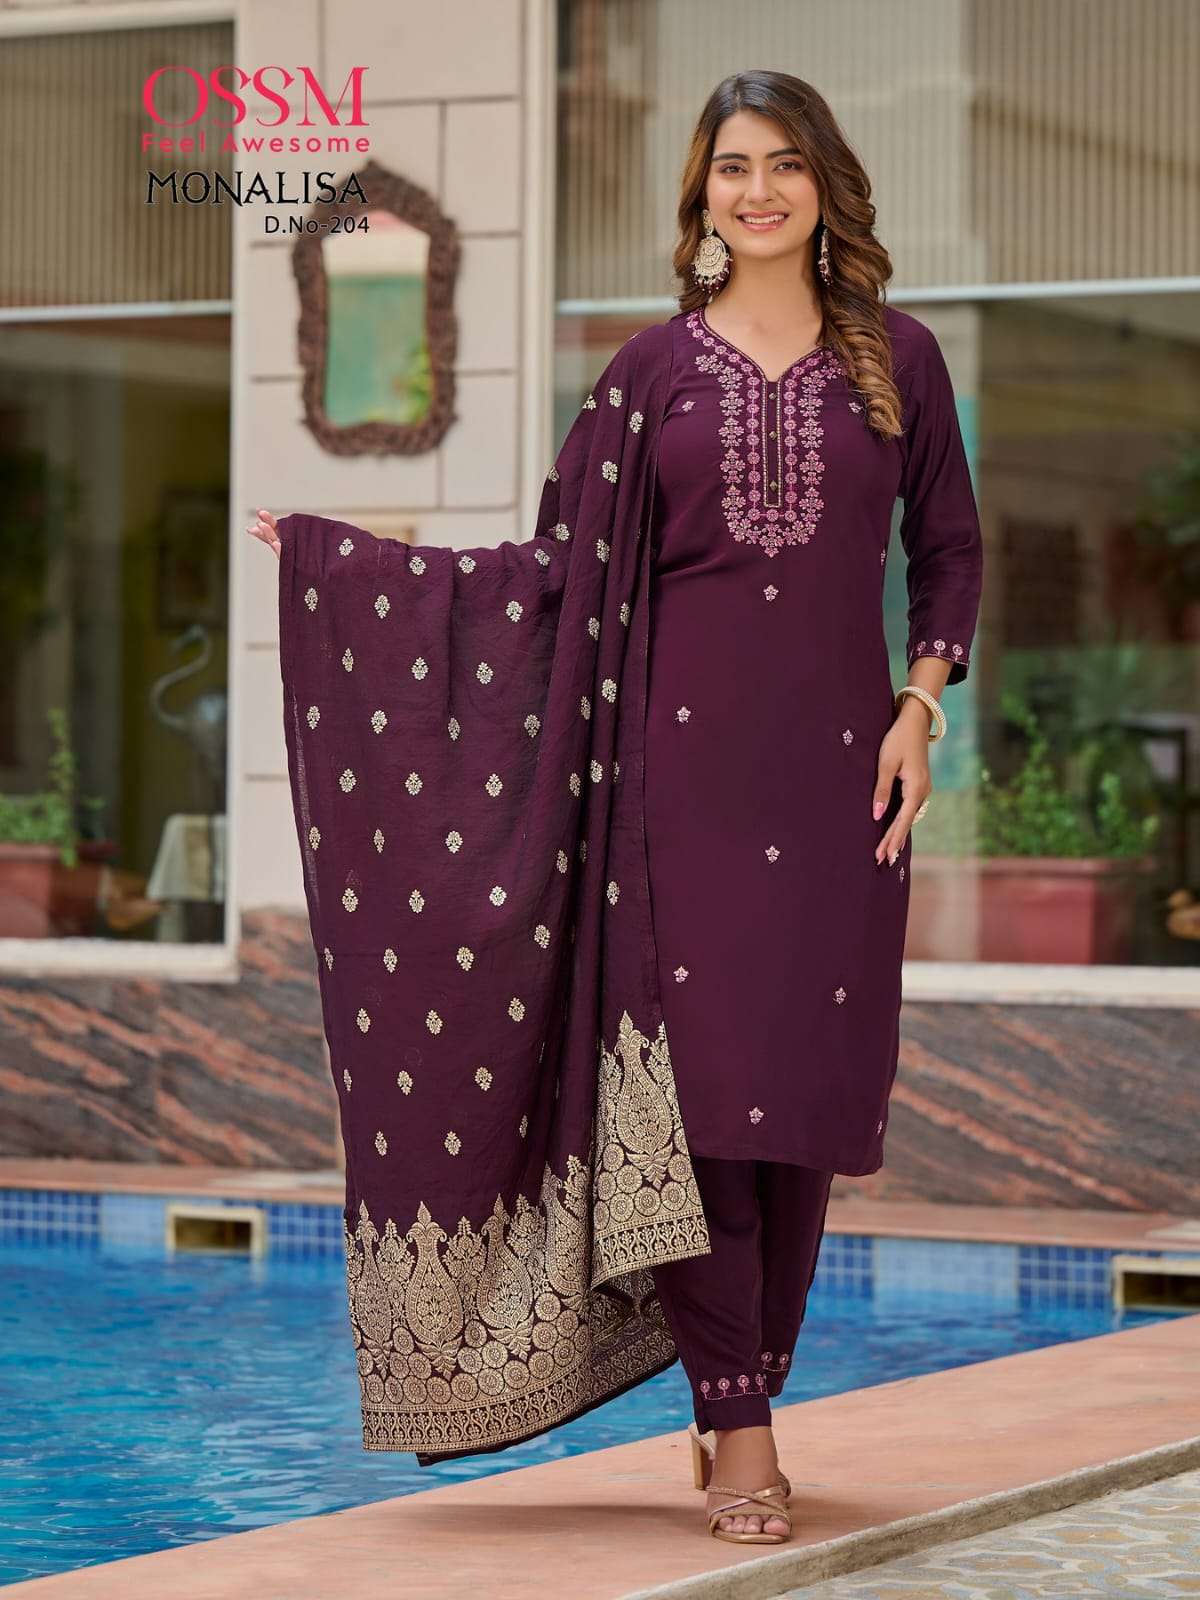 ossm monalisa 201-206 series designer wedding wear readymade pakistani salwar kameez wholesaler surat